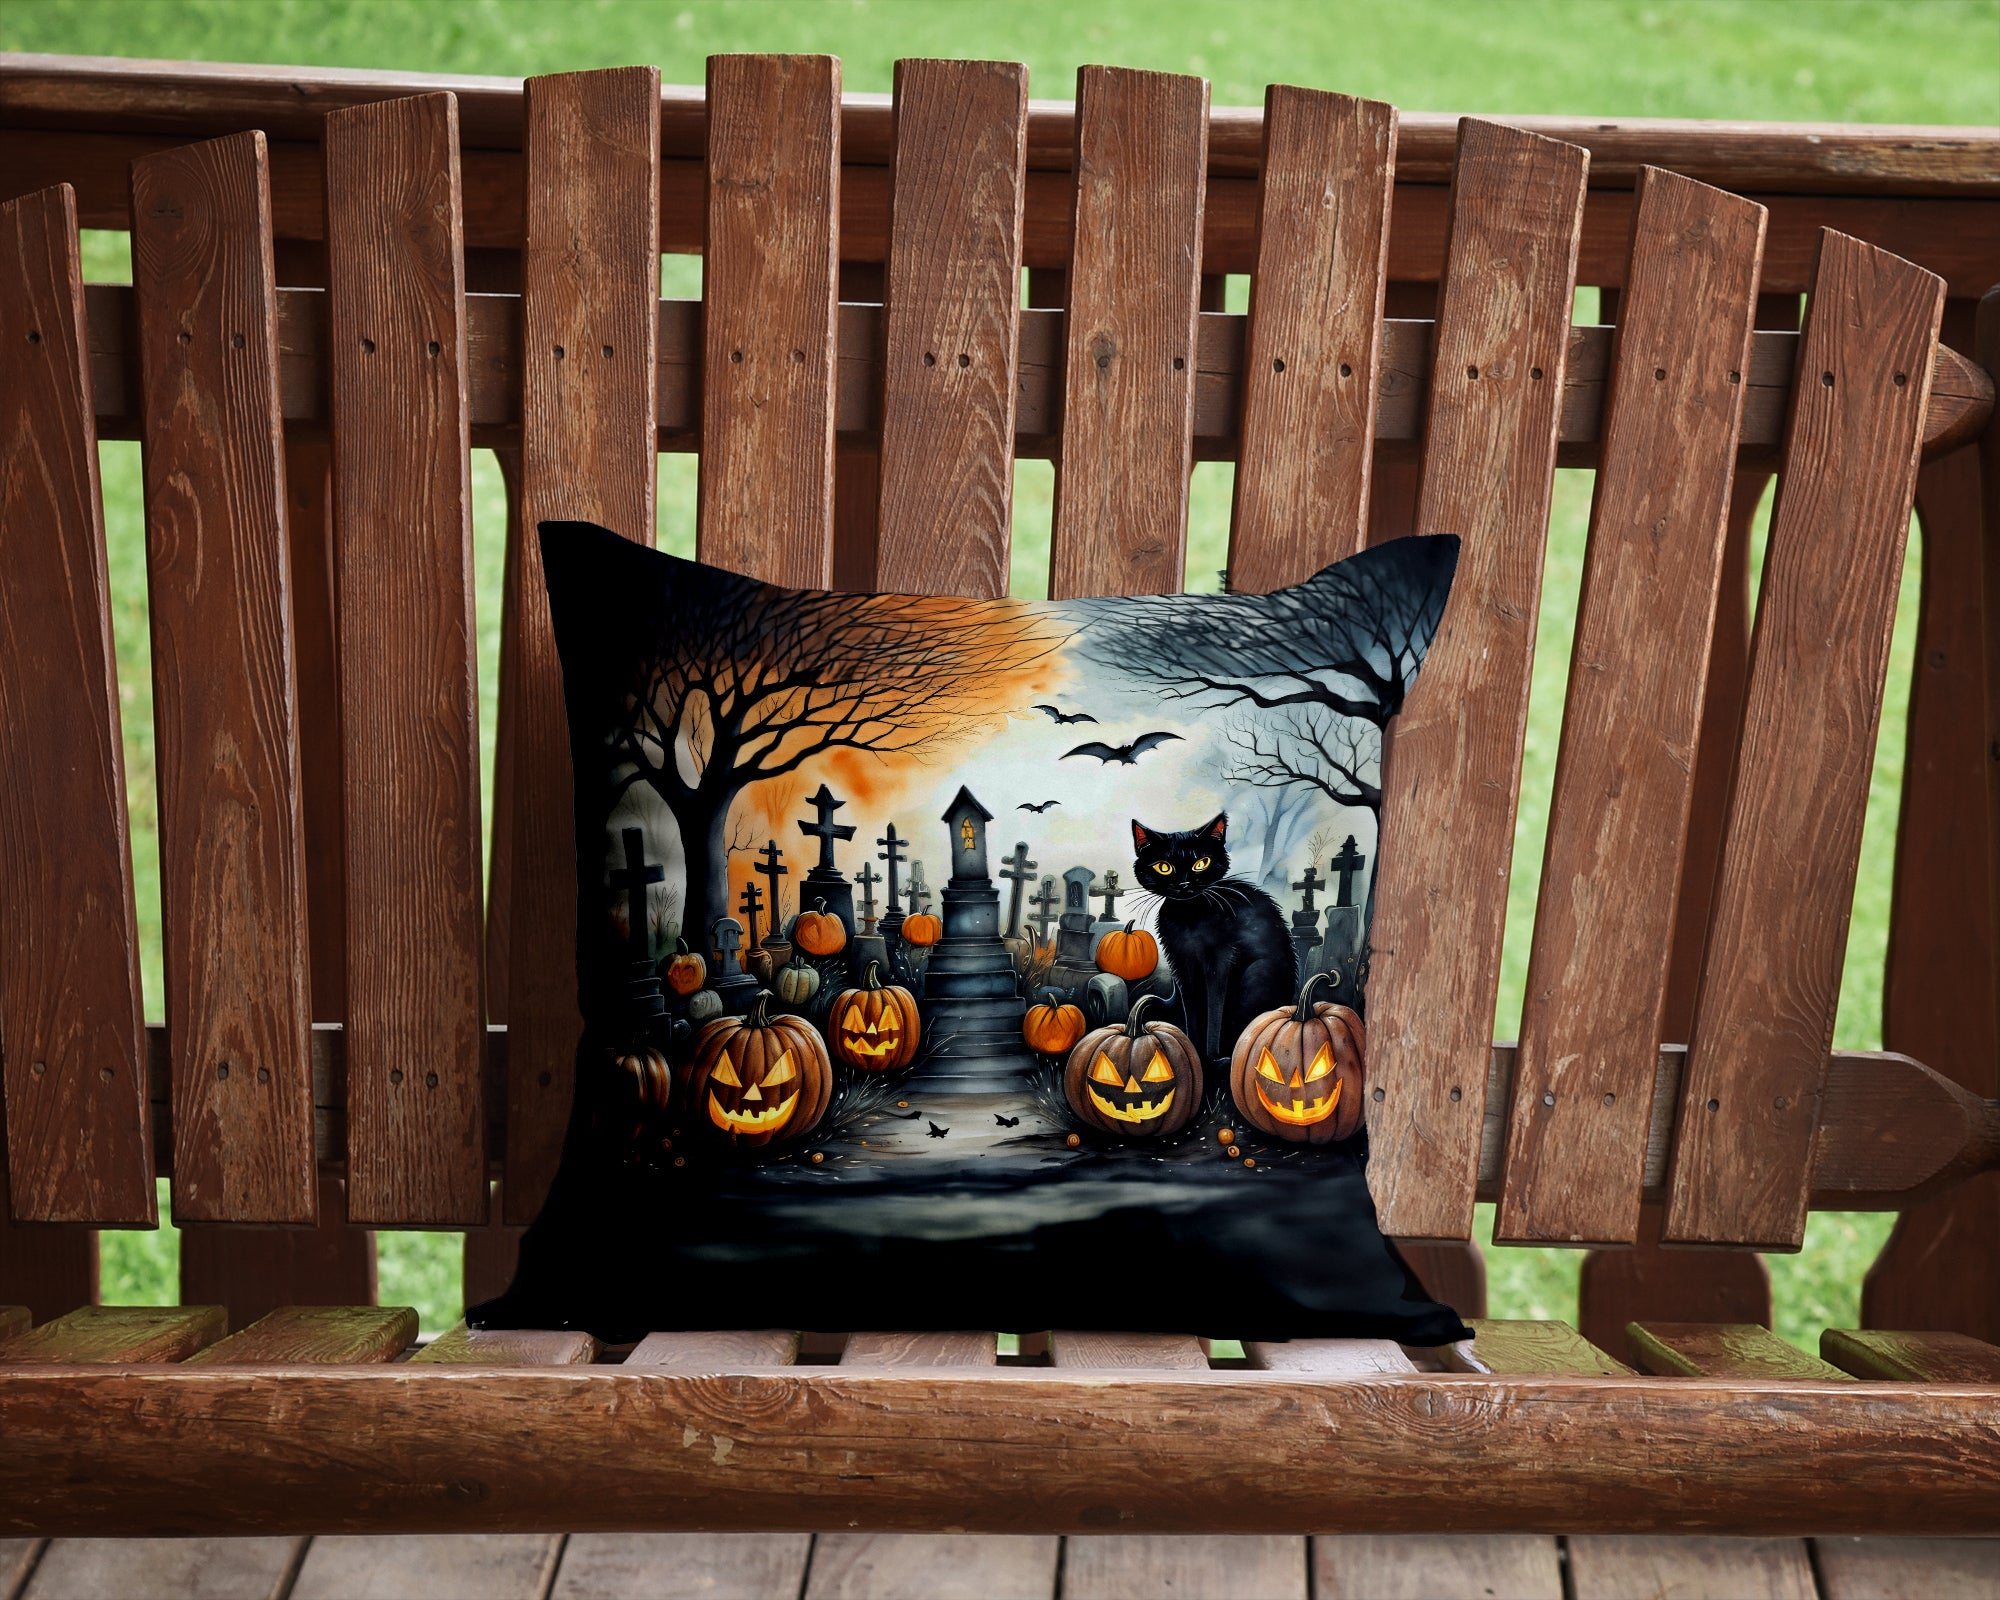 Black Cat Spooky Halloween Fabric Decorative Pillow